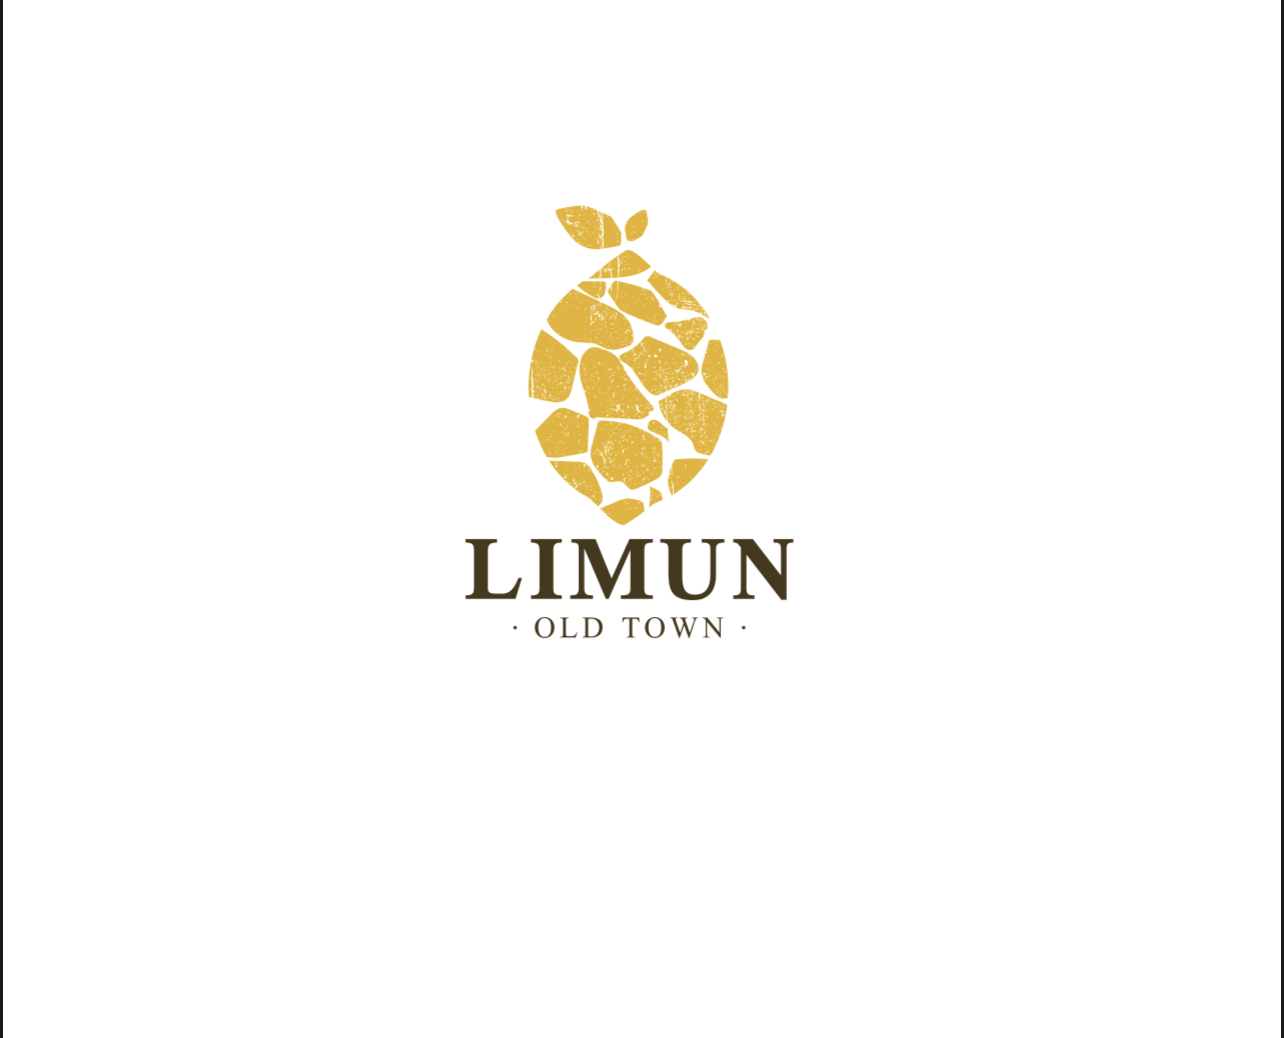 Limun old town još jedan uspješan primjer oživljavanja Stare varoši; Glavni grad uskoro raspisuje novi konkurs podrške za slične ideje